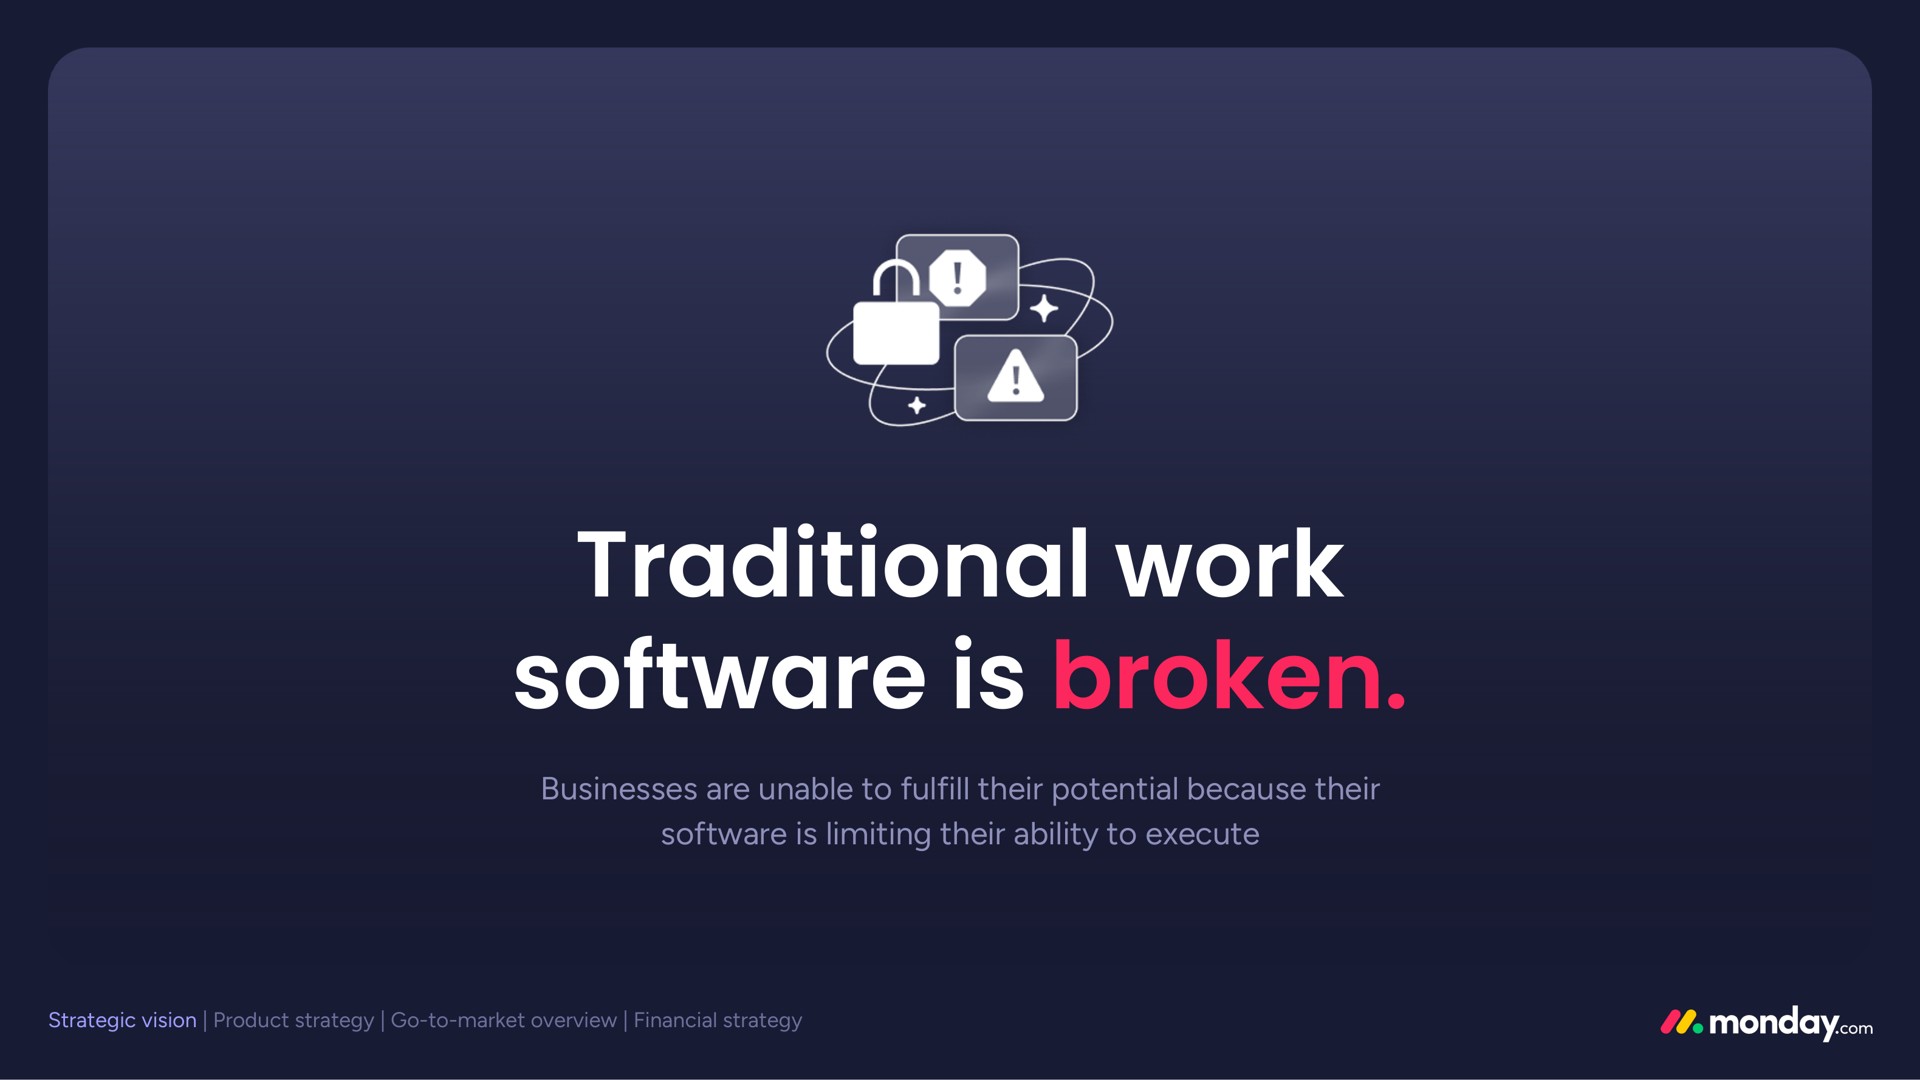 traditional work is broken | monday.com